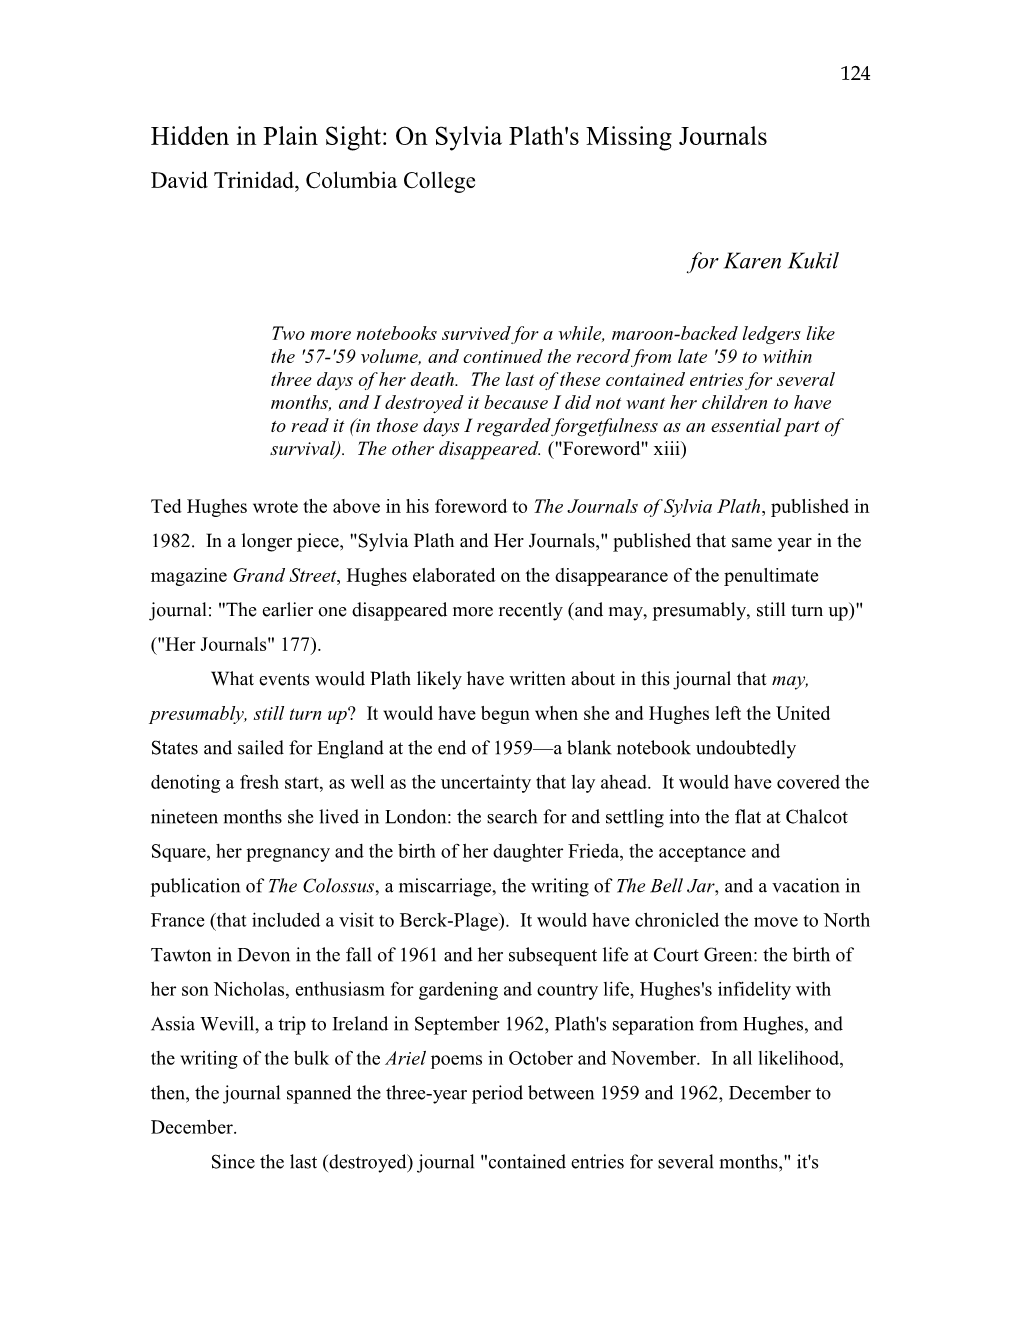 On Sylvia Plath's Missing Journals David Trinidad, Columbia College